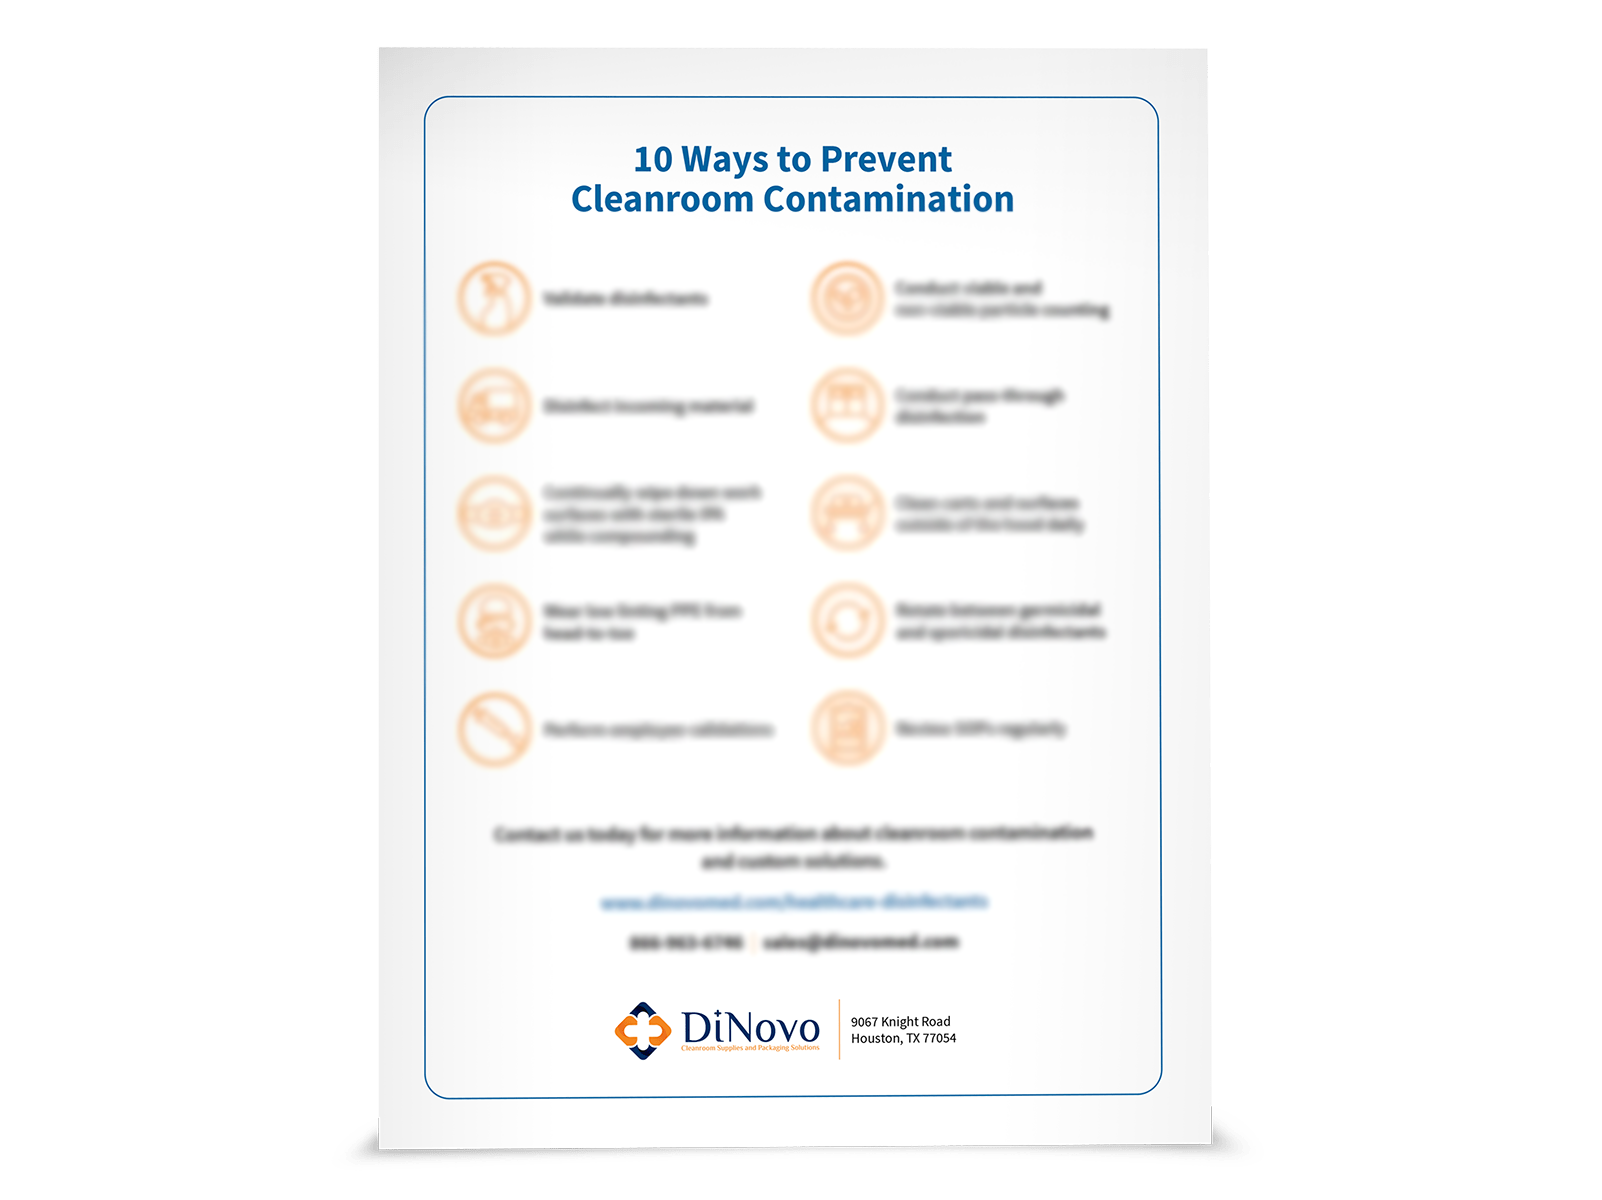 DiNovo cleanroom contamination Infographic-min-wide